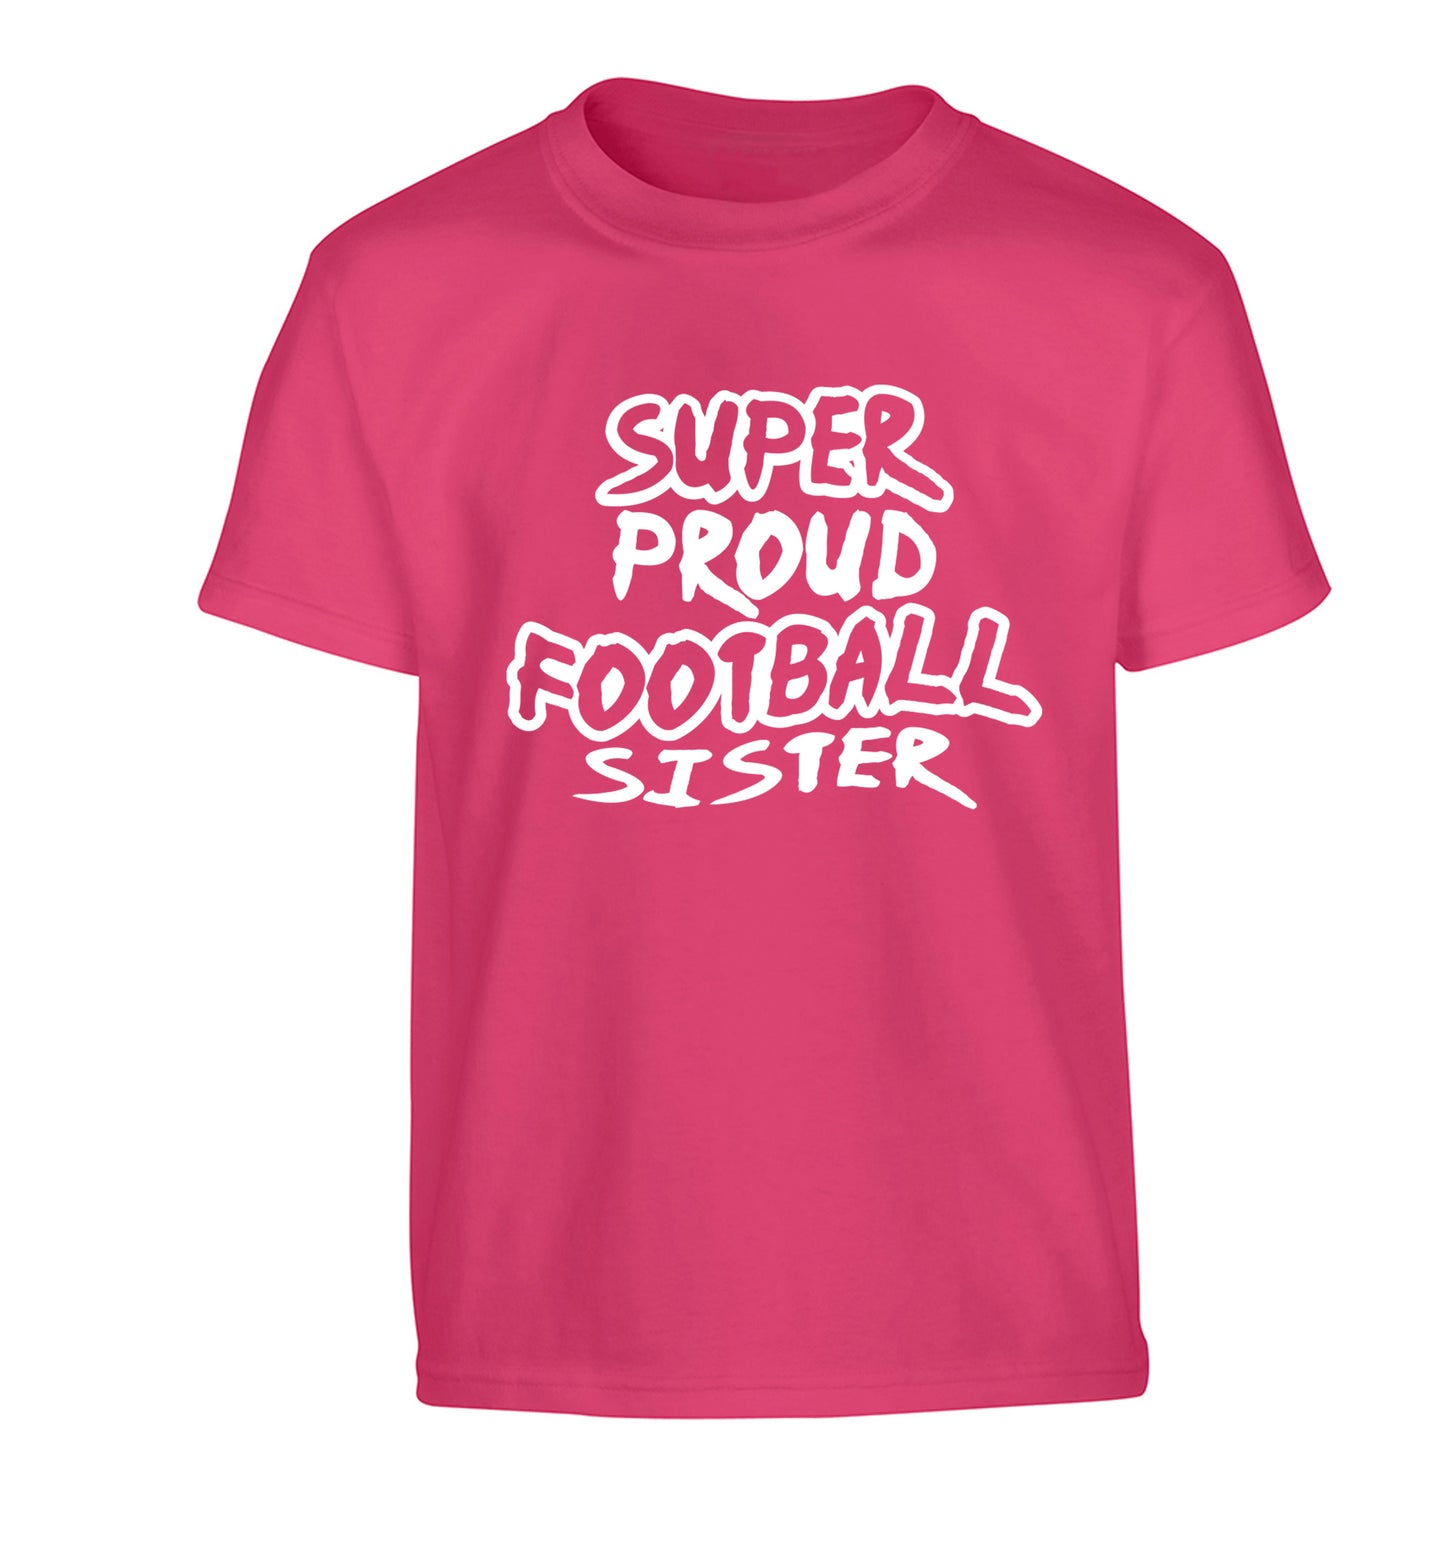 Super proud football sister Children's pink Tshirt 12-14 Years